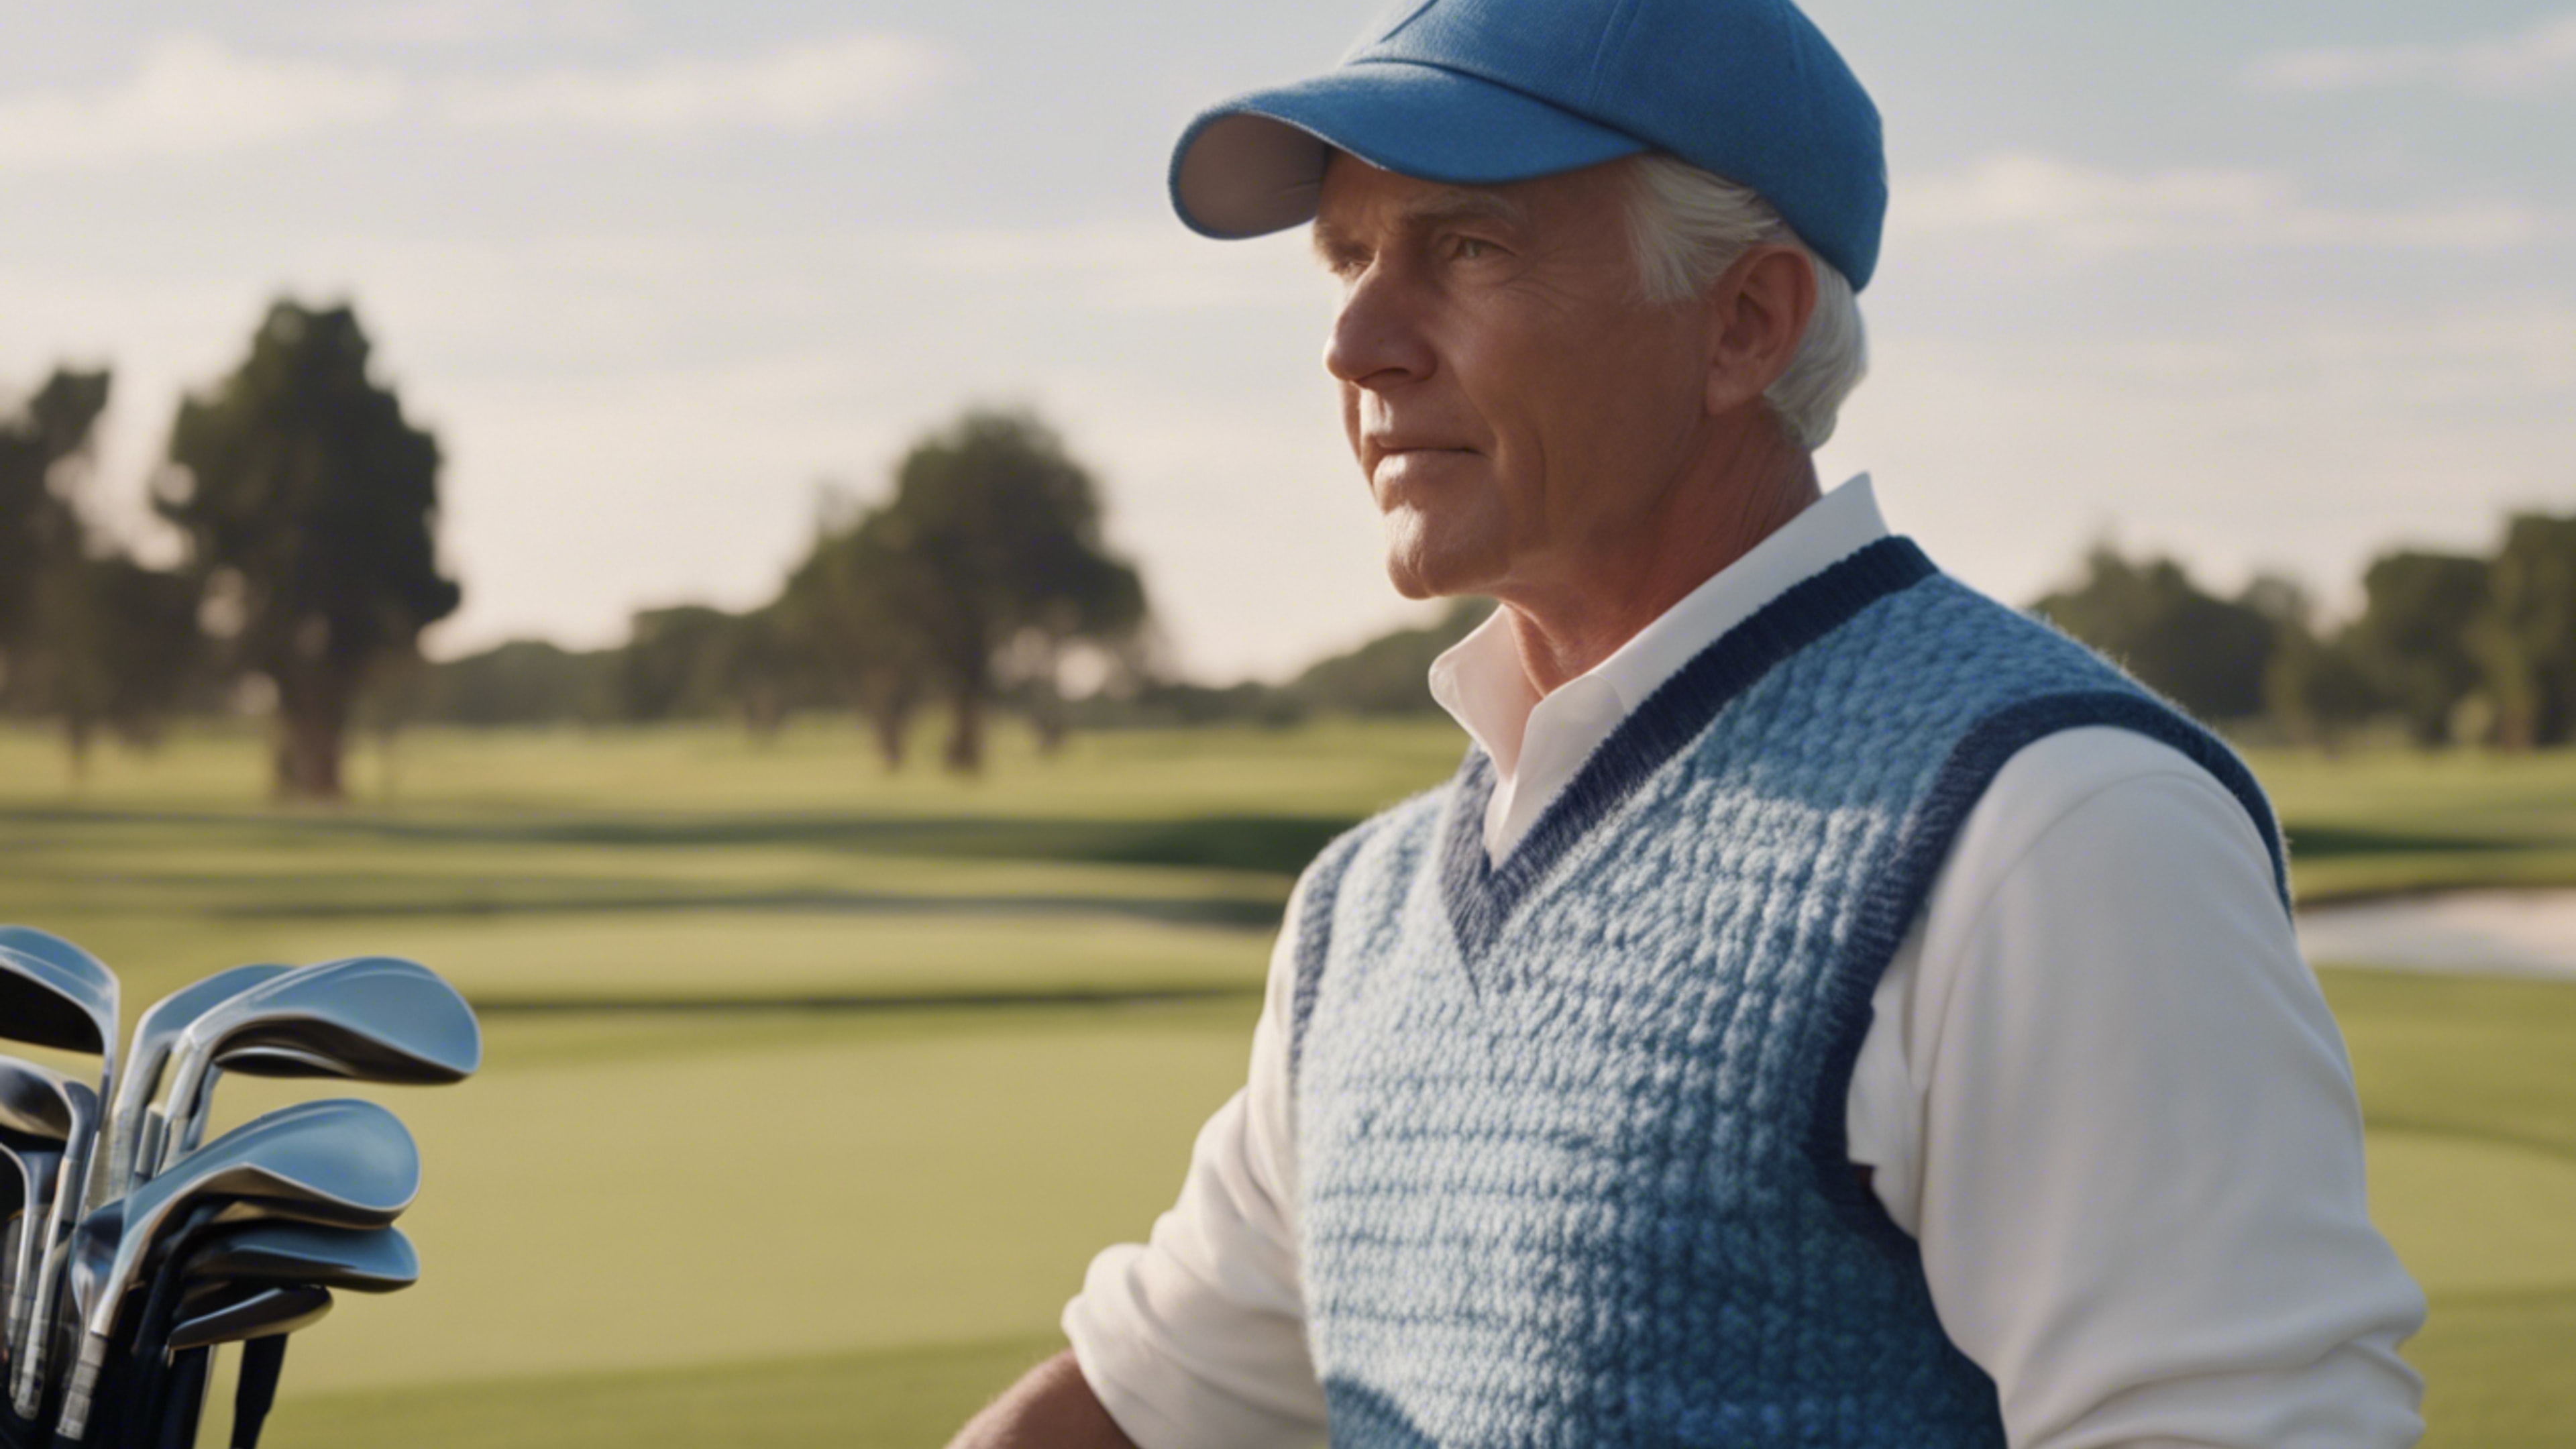 A preppy gentleman playing golf, wearing a crisp blue sweater vest, white trousers, and a blue plaid golf cap. Tapeta[e529d0abba9b41109f82]